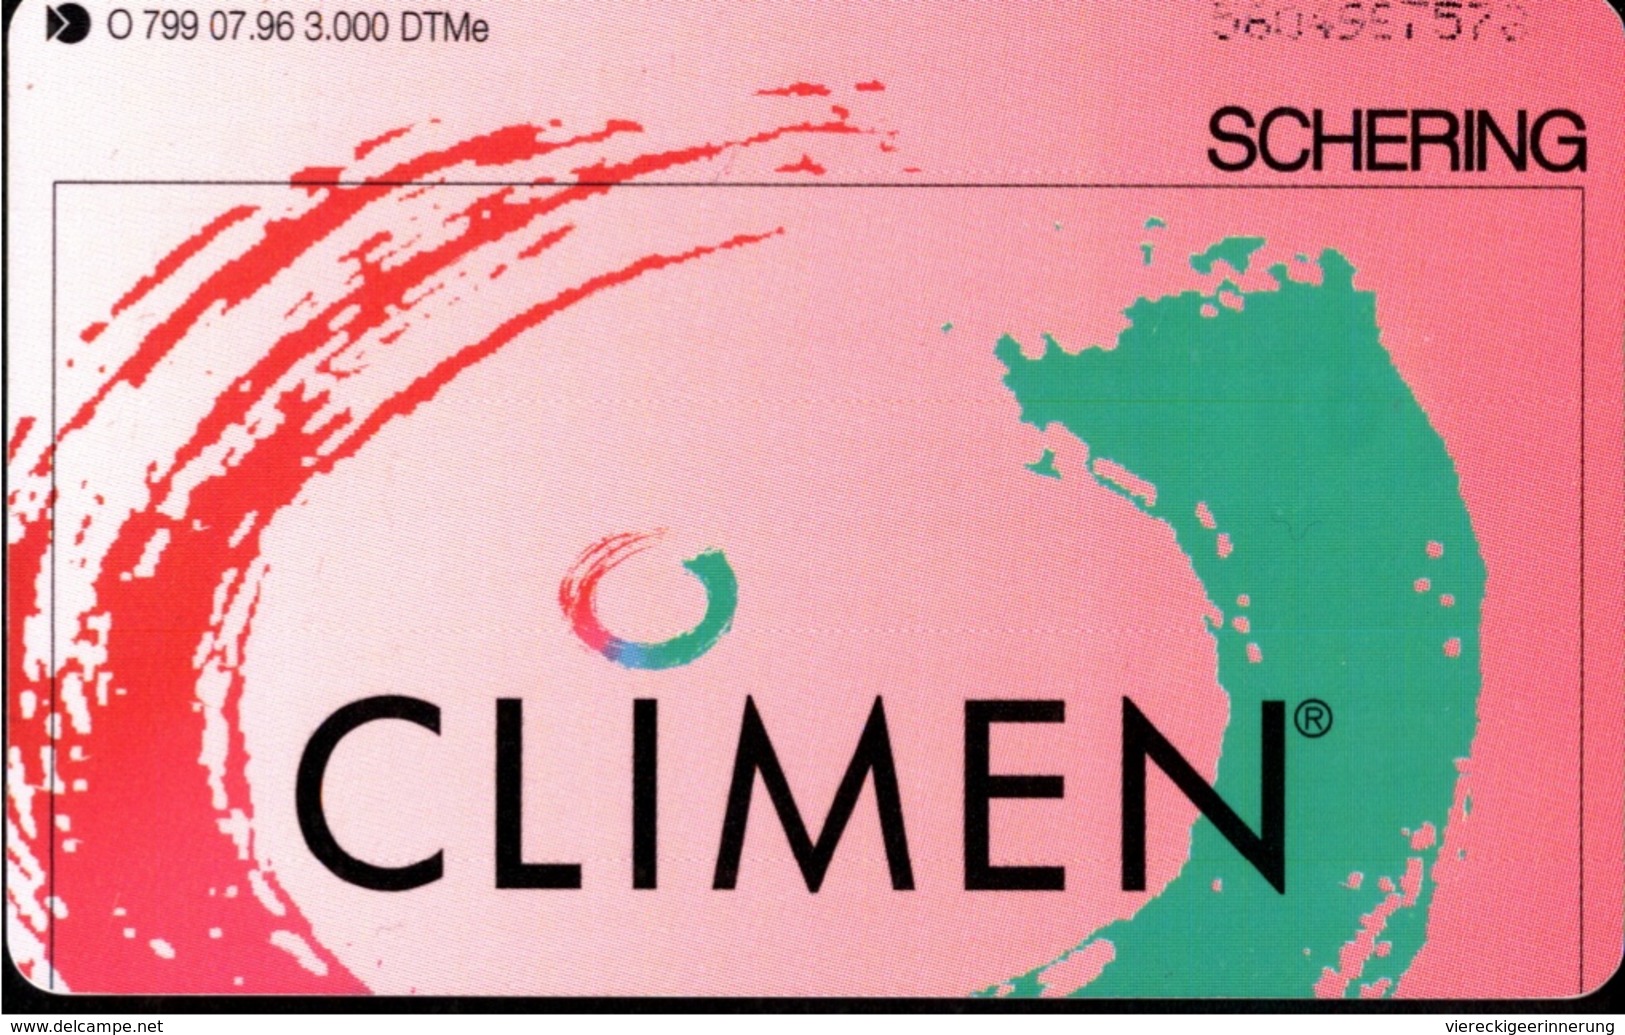 ! Telefonkarte, Telecarte, Phonecard, 1996, O799, Auflage 3000, Schering, Climen, Germany - O-Series : Séries Client